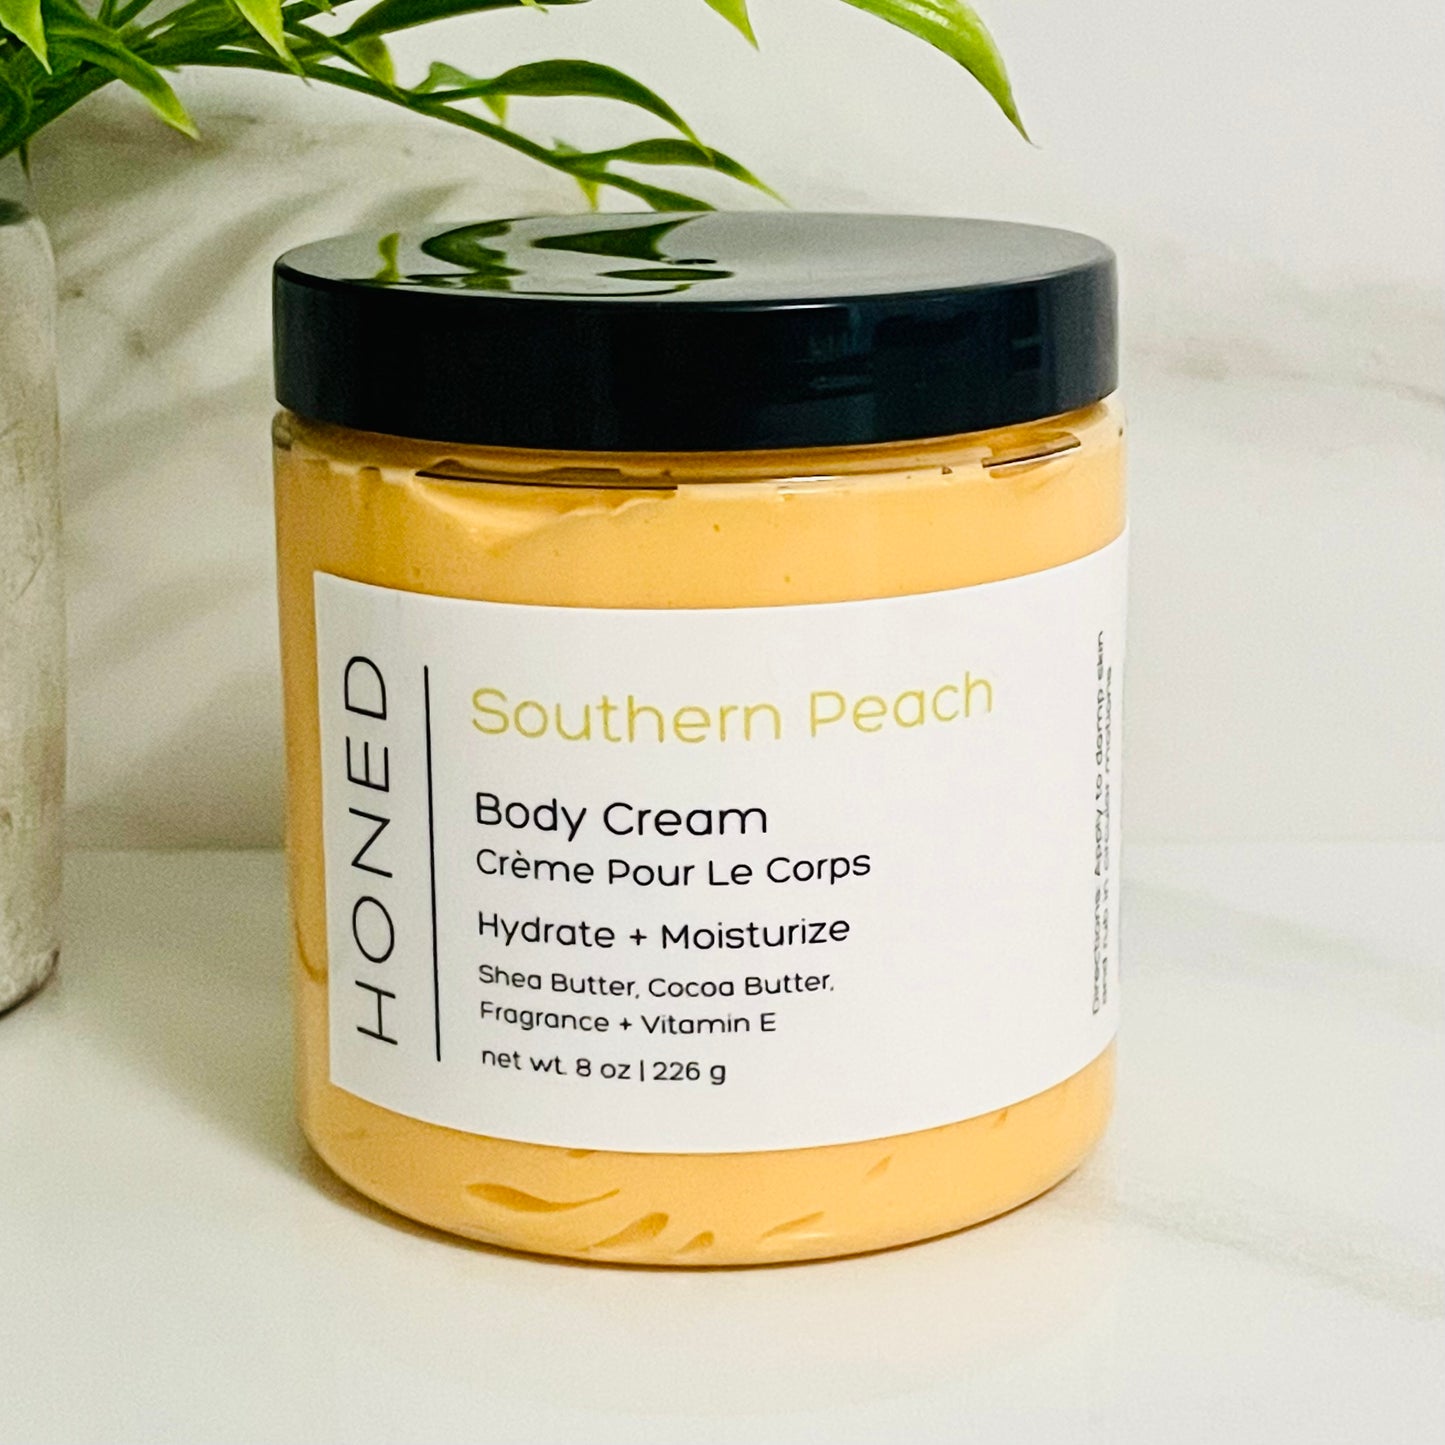 Southern Peach Body Cream